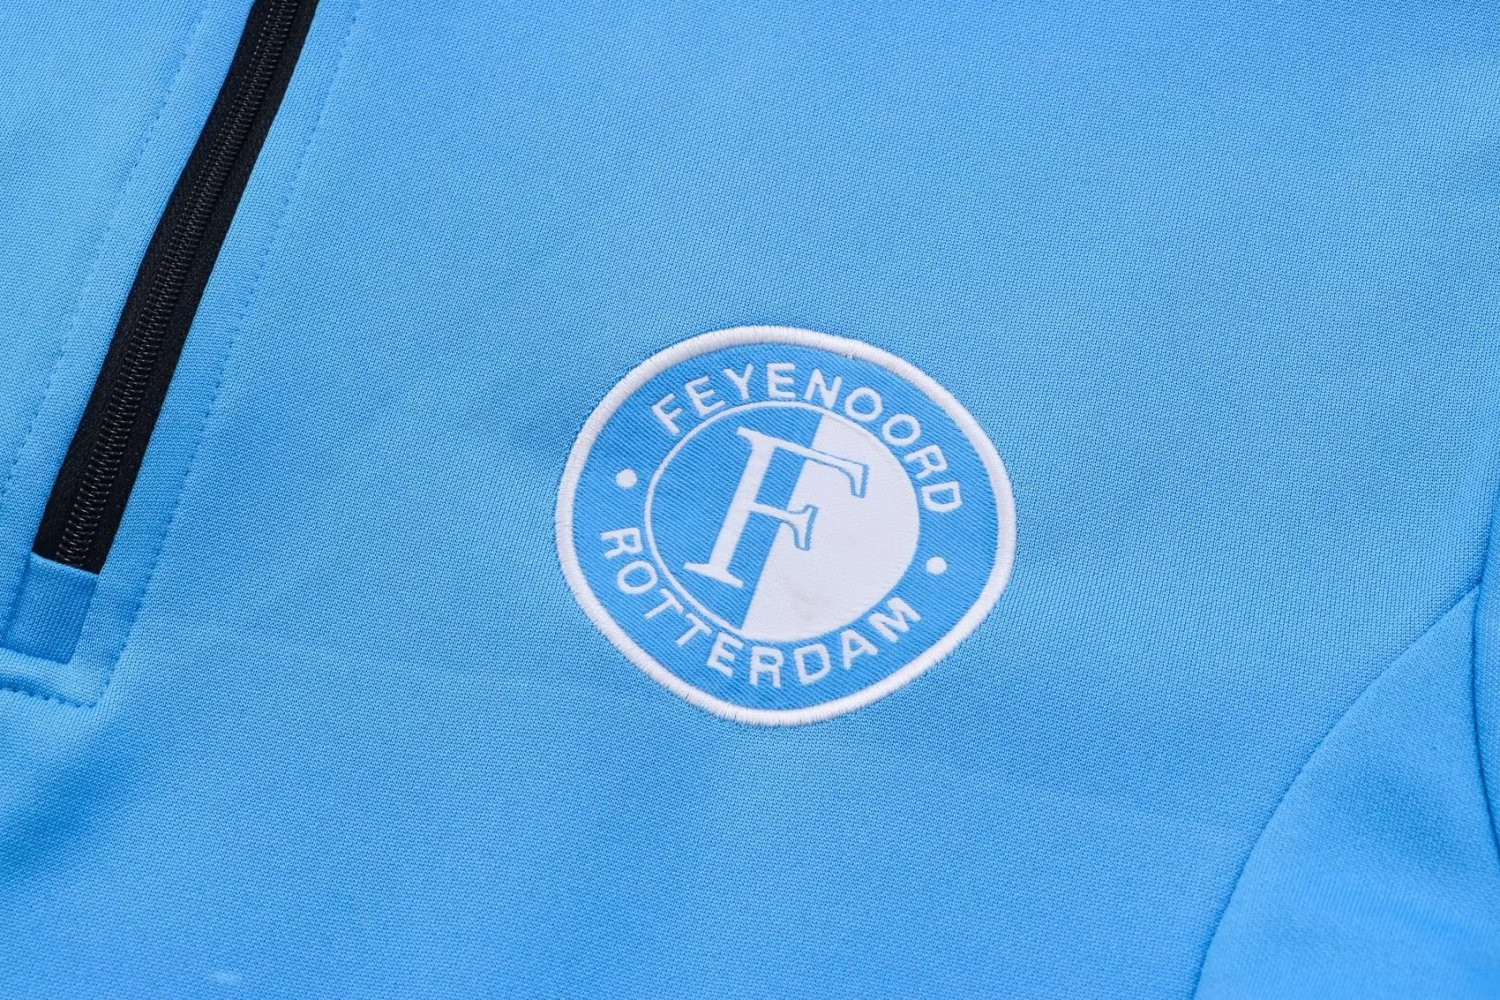 Feyenoord Soccer Training Suit Light Blue 2022/23 Mens